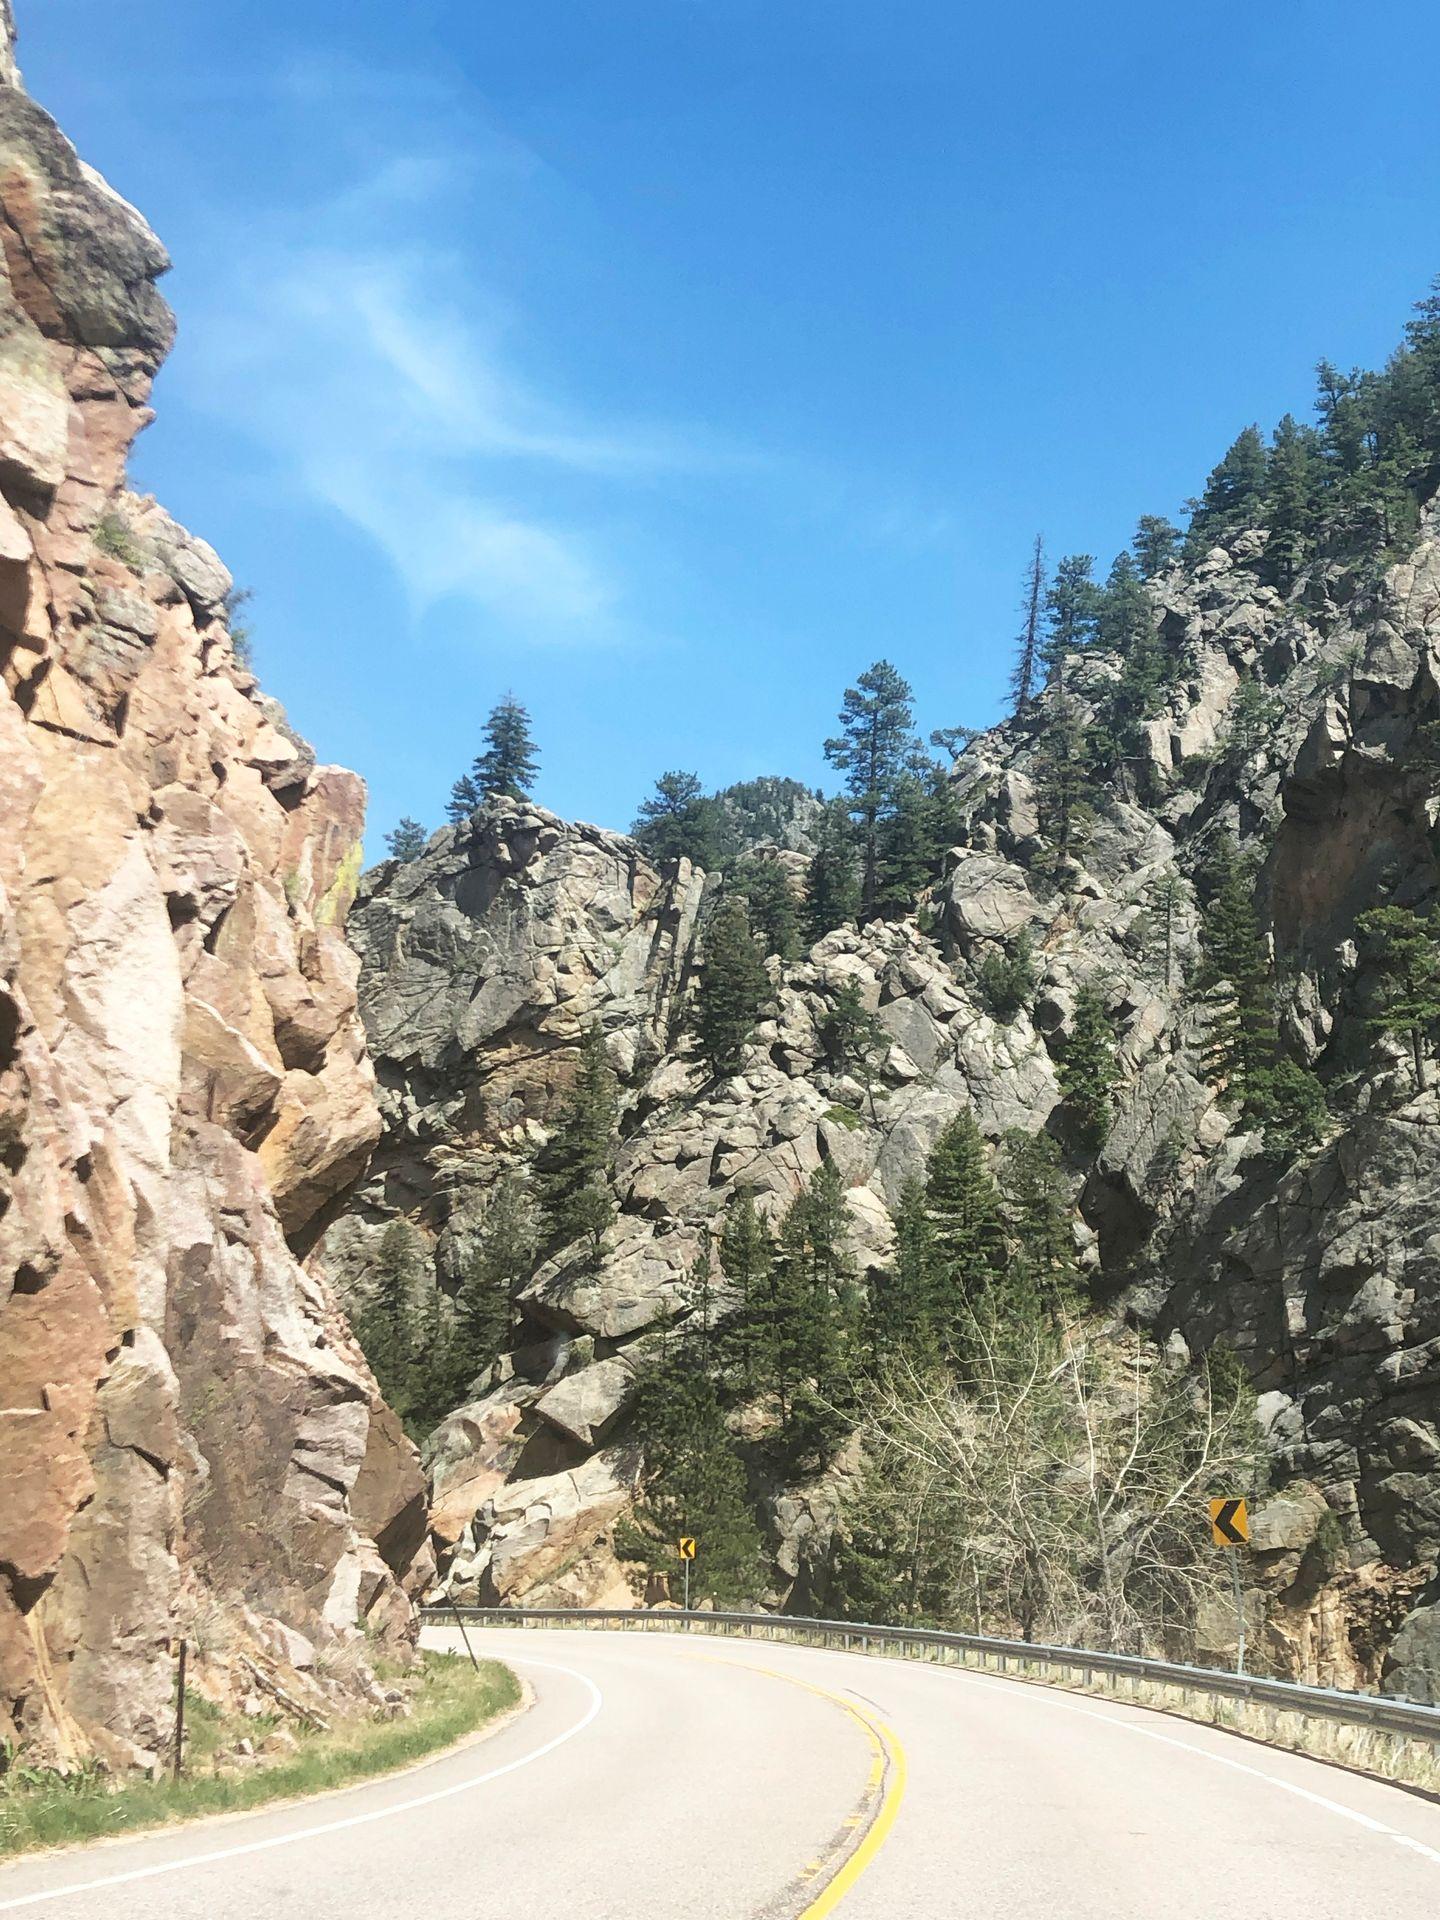 A road with huge, rock ledges on both sides.